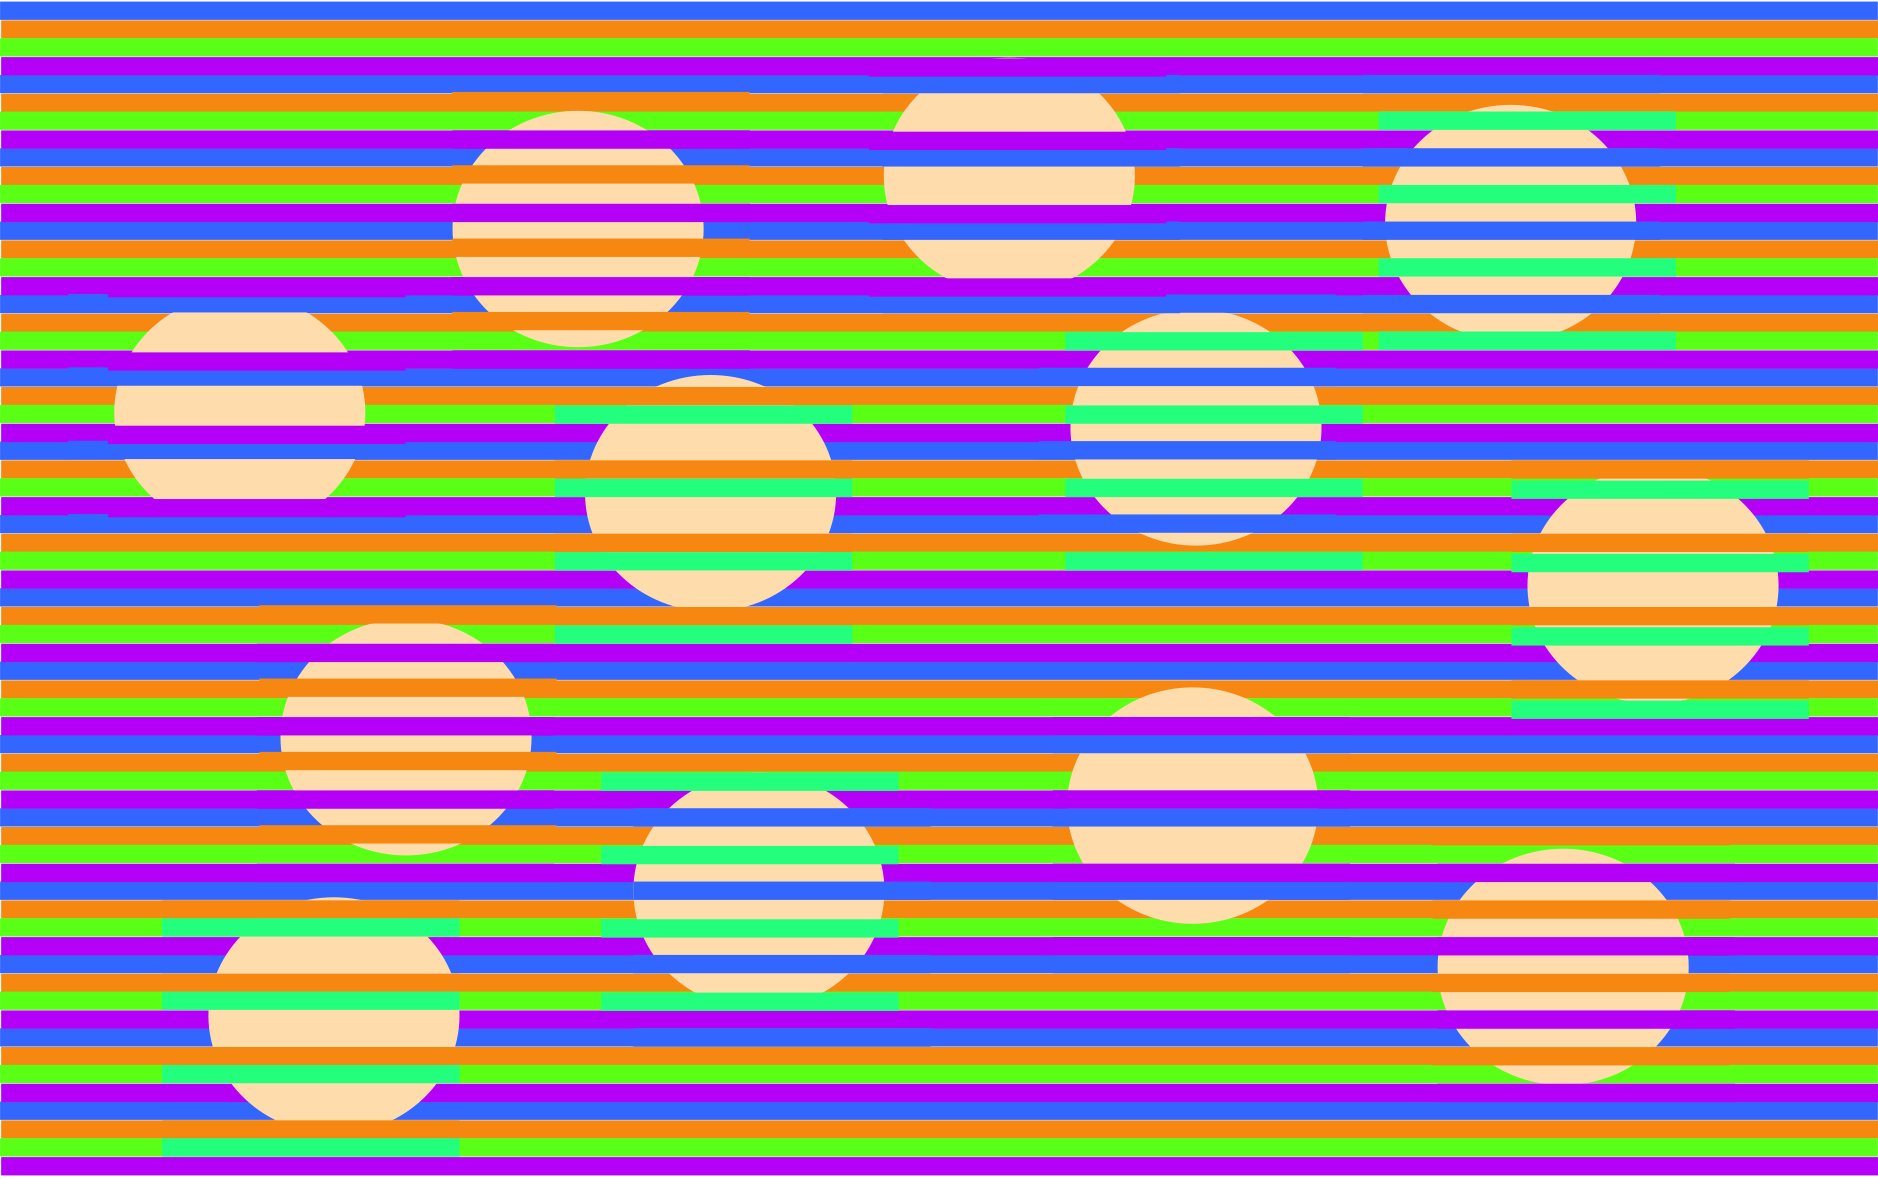 David Novick UTEP optical illusion 